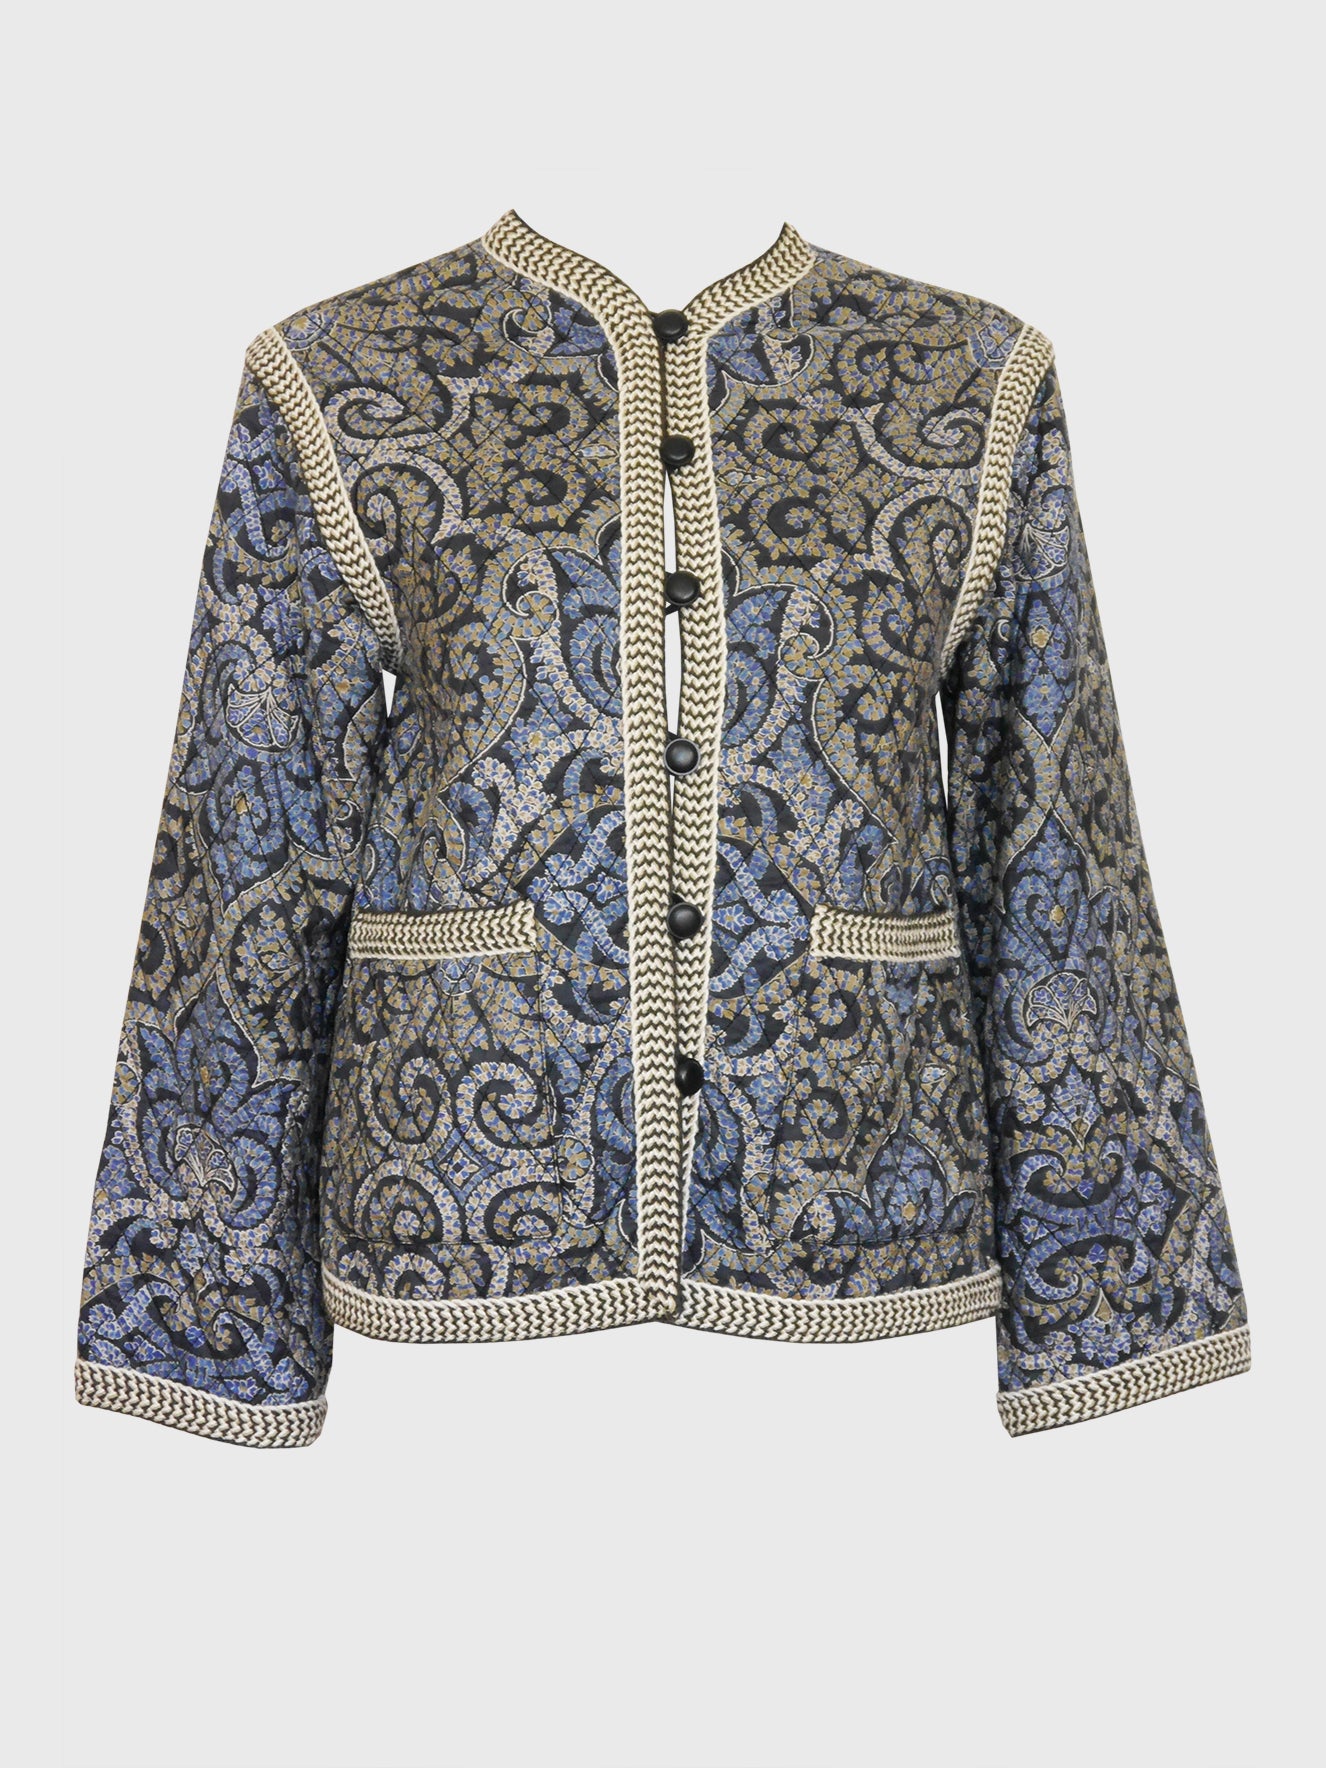 YVES SAINT LAURENT Vintage Spring 1977 Quilted Silk Evening Jacket